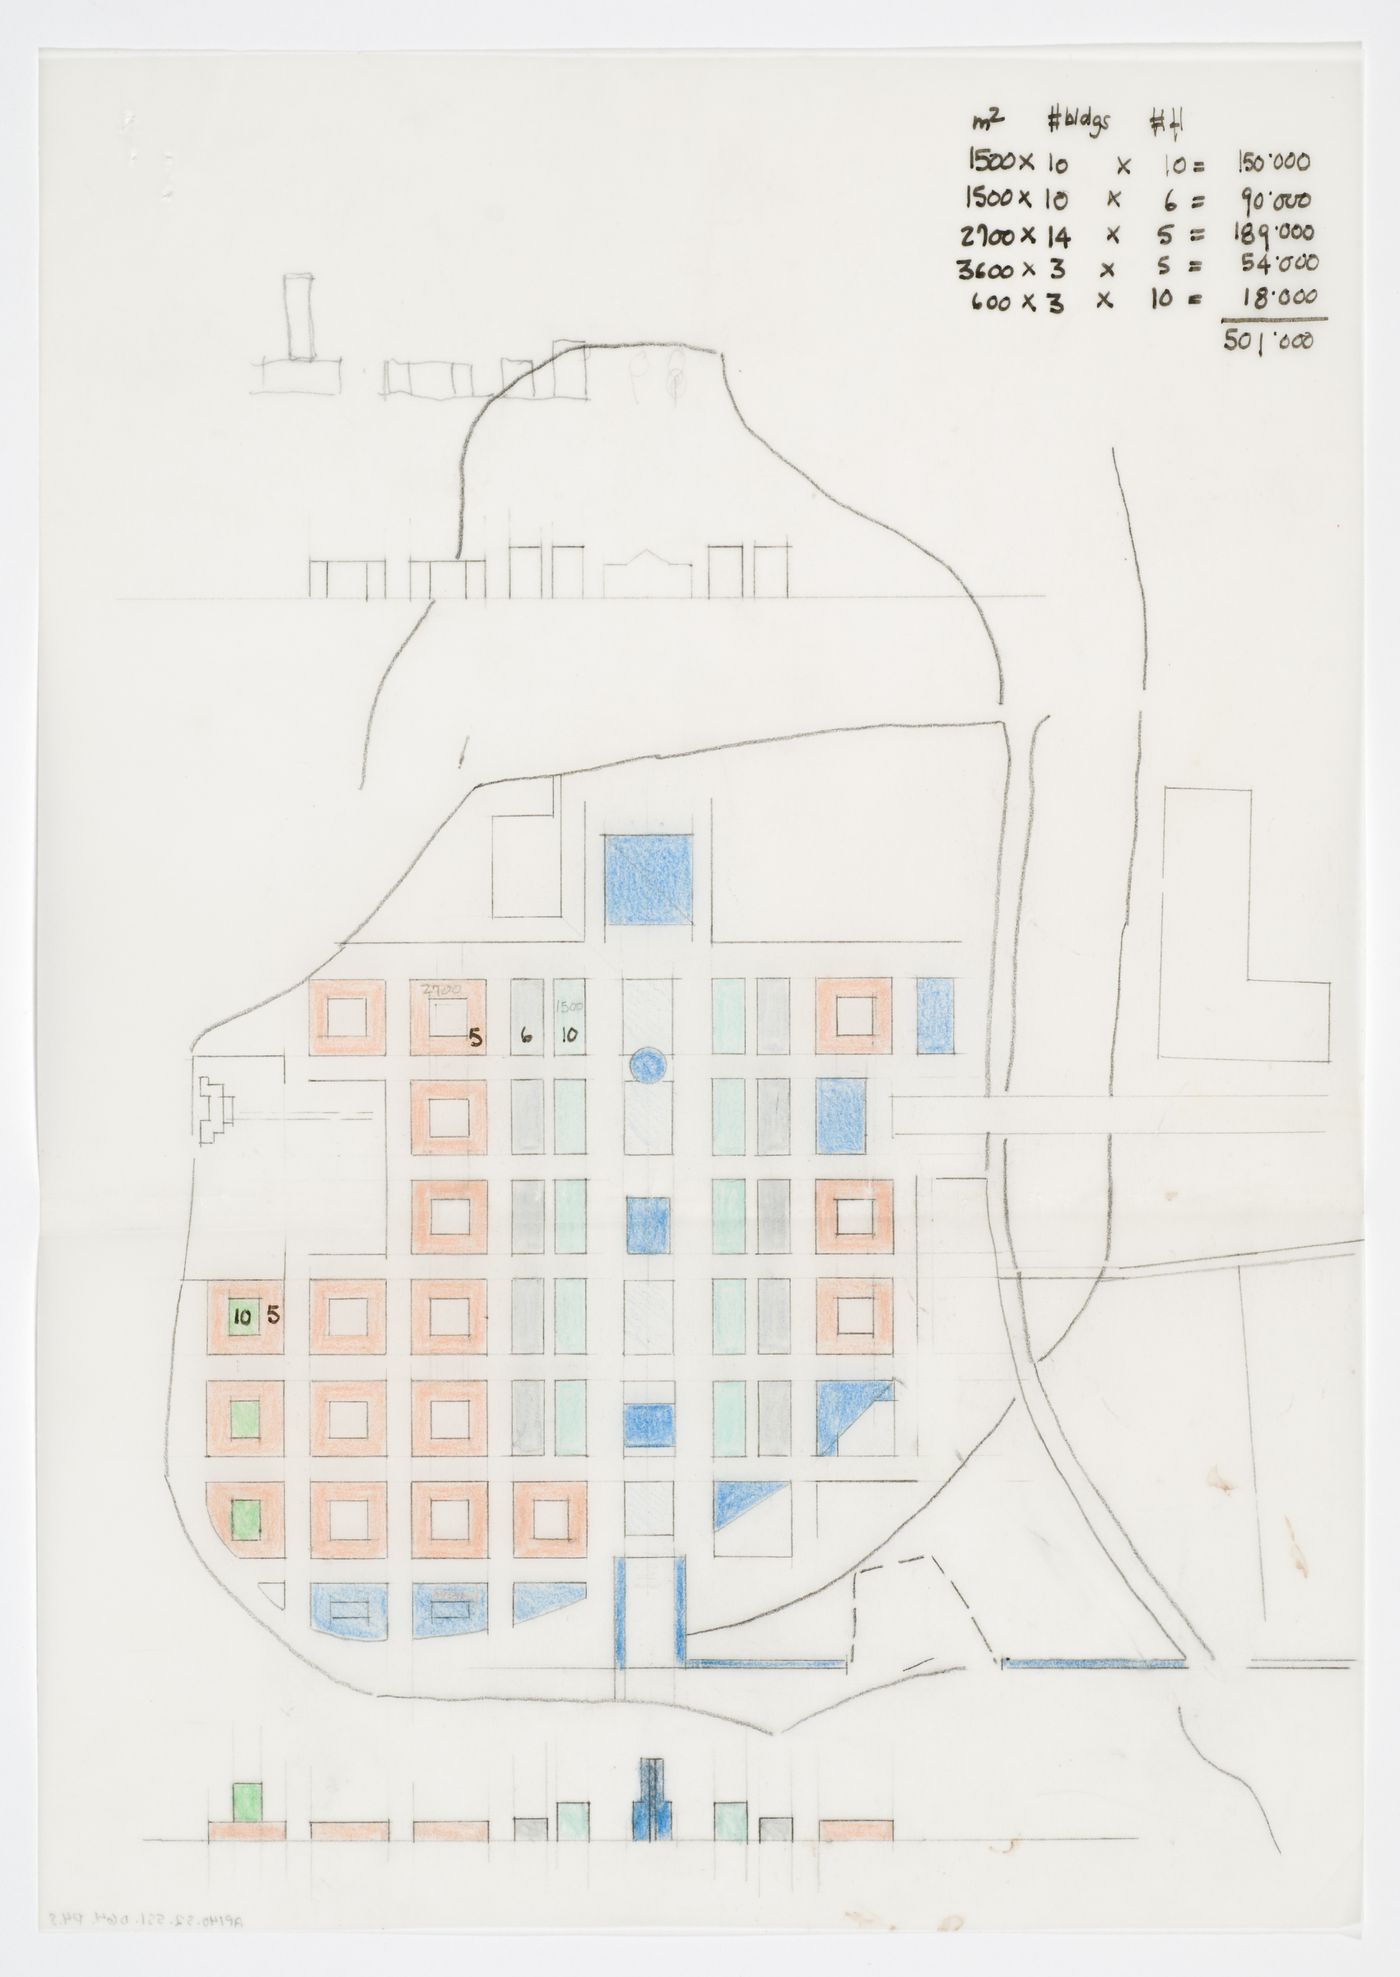 New Town Centre, Caselecchio di Reno, Italy: plan and elevations